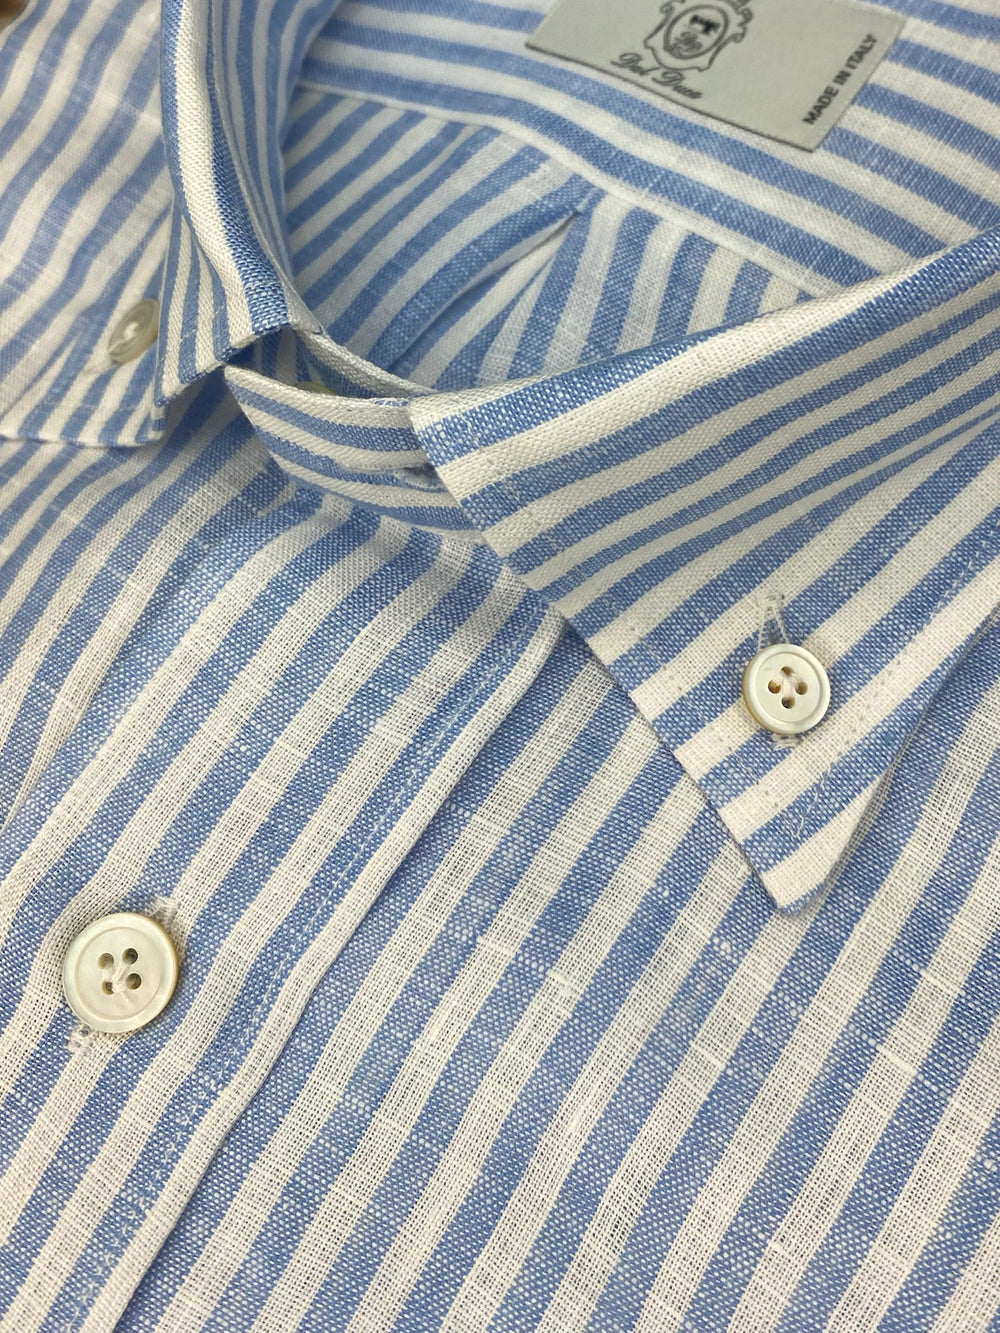 Stripped White and Light Blue Linen Shirt